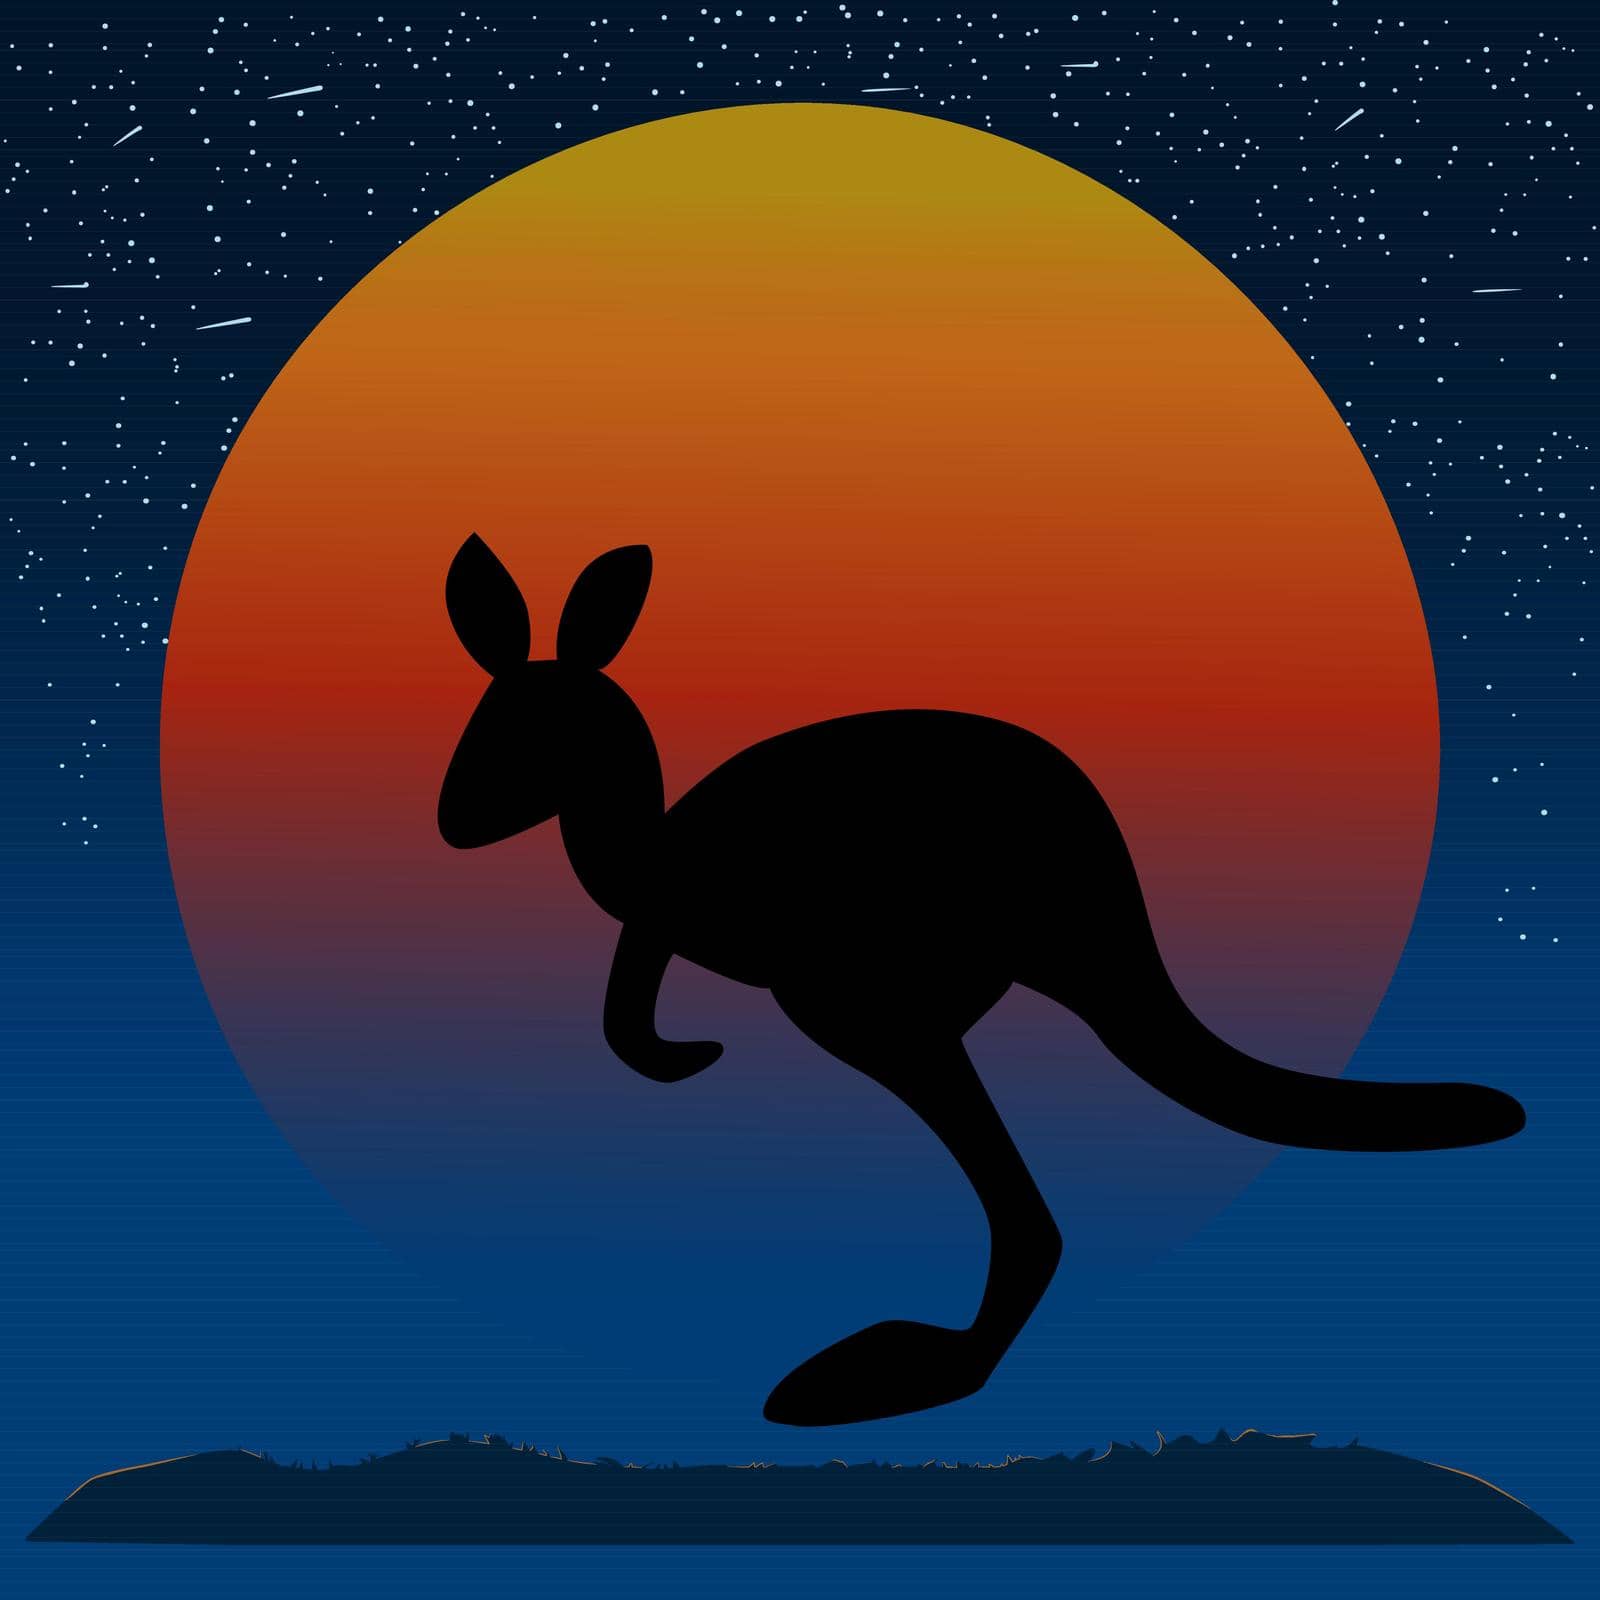 Kangaroo silhouette at sunset background. Sundown in Australia with stars sky and wallaby figure. by KajaNi